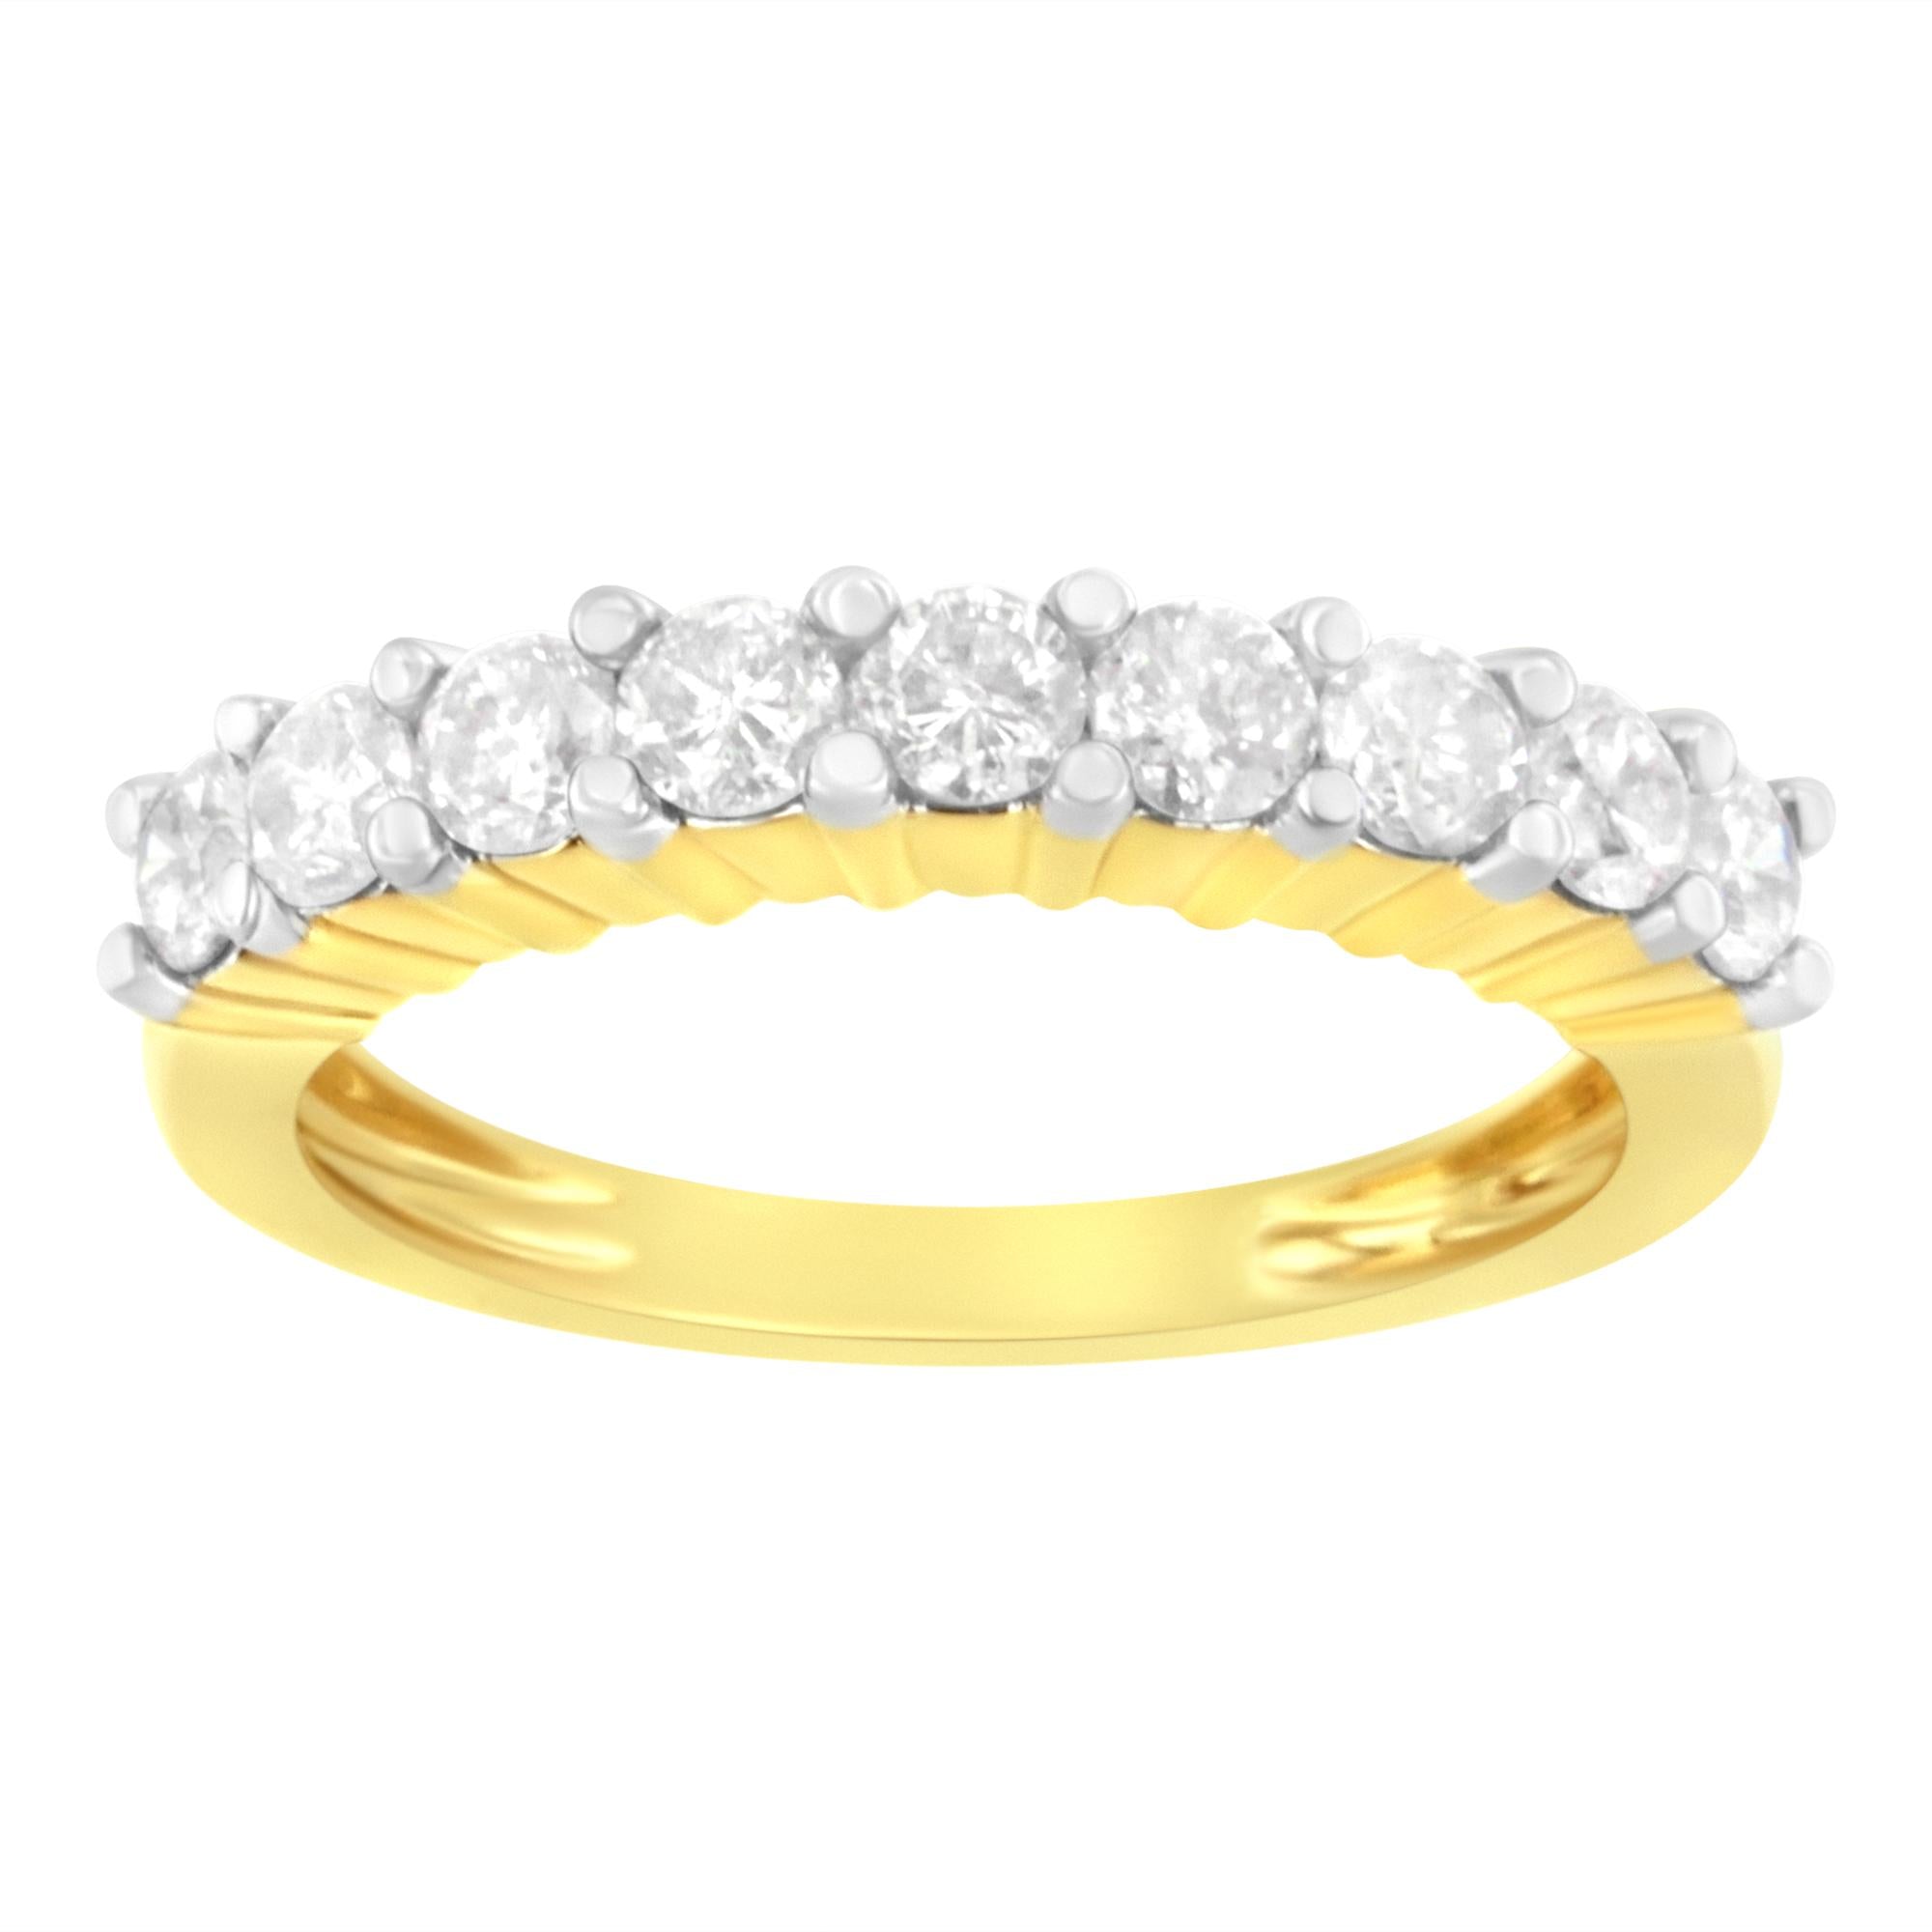 IGI Certified 10KT Yellow Gold 1 Cttw Diamond Band Ring (J-K, I1-I2)